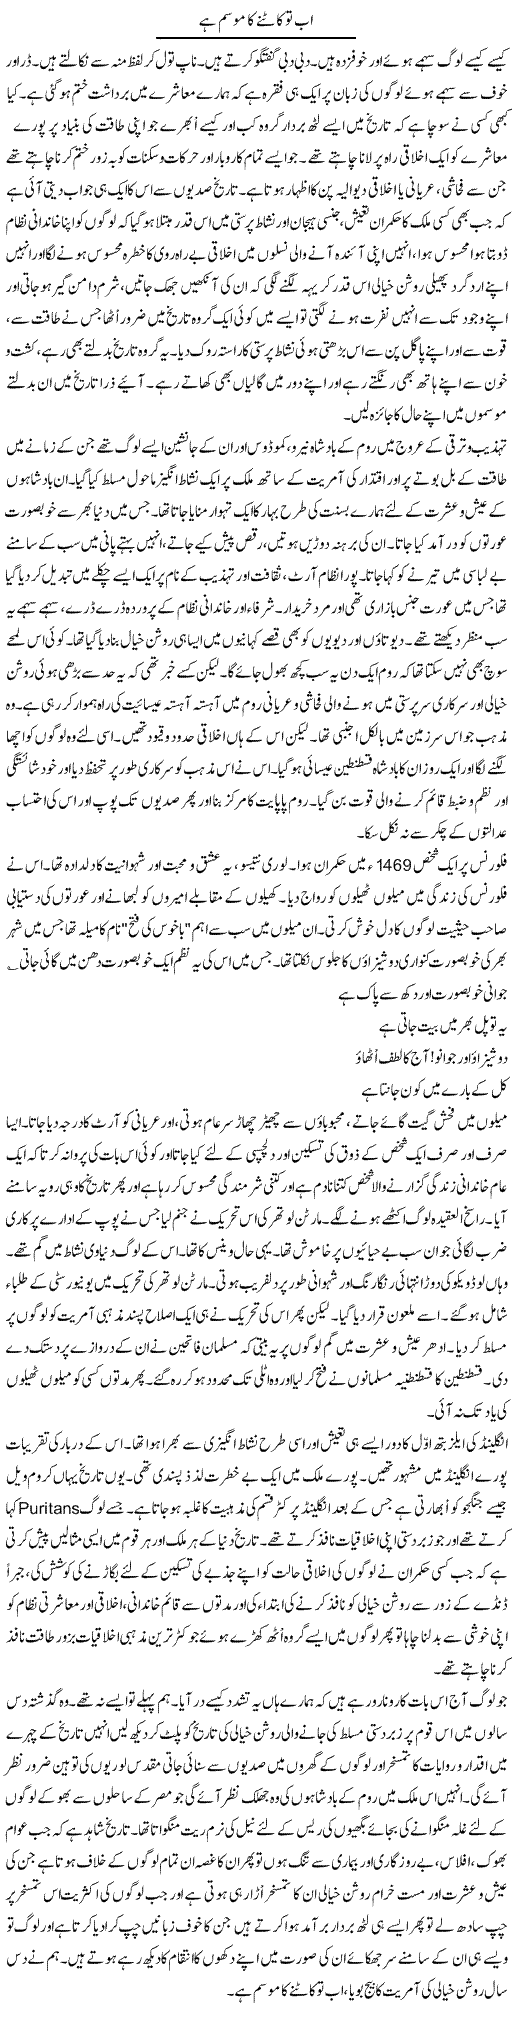 Destroyed Society of Pakistan - Urdu Column By Orya Maqbool Jan